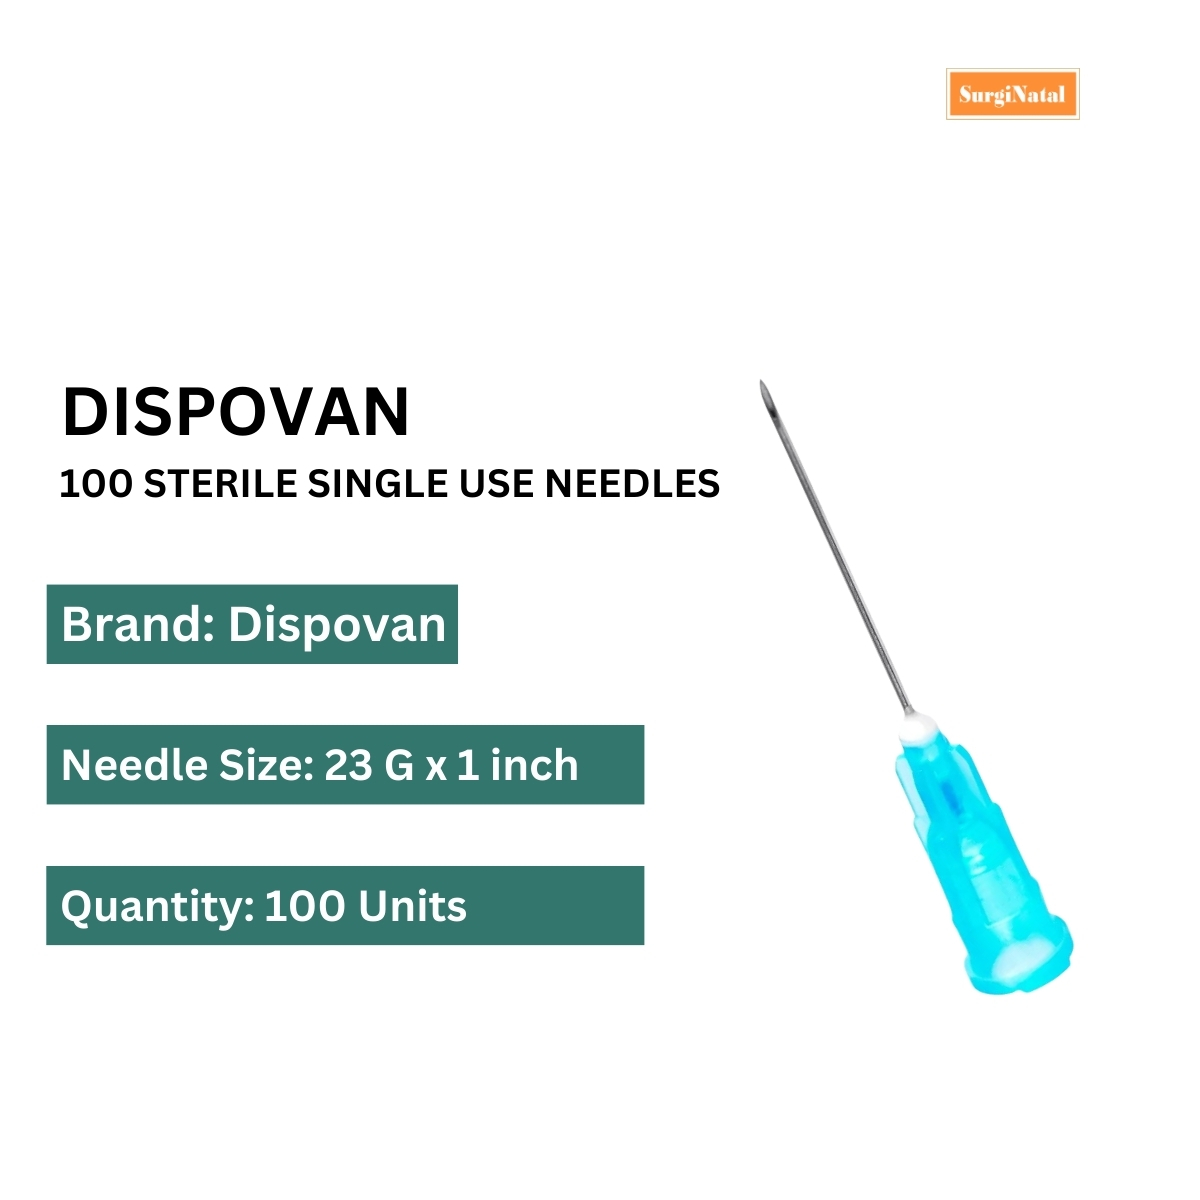 dispo van hypodermic needle - 23g*1 inch - 100 units pack